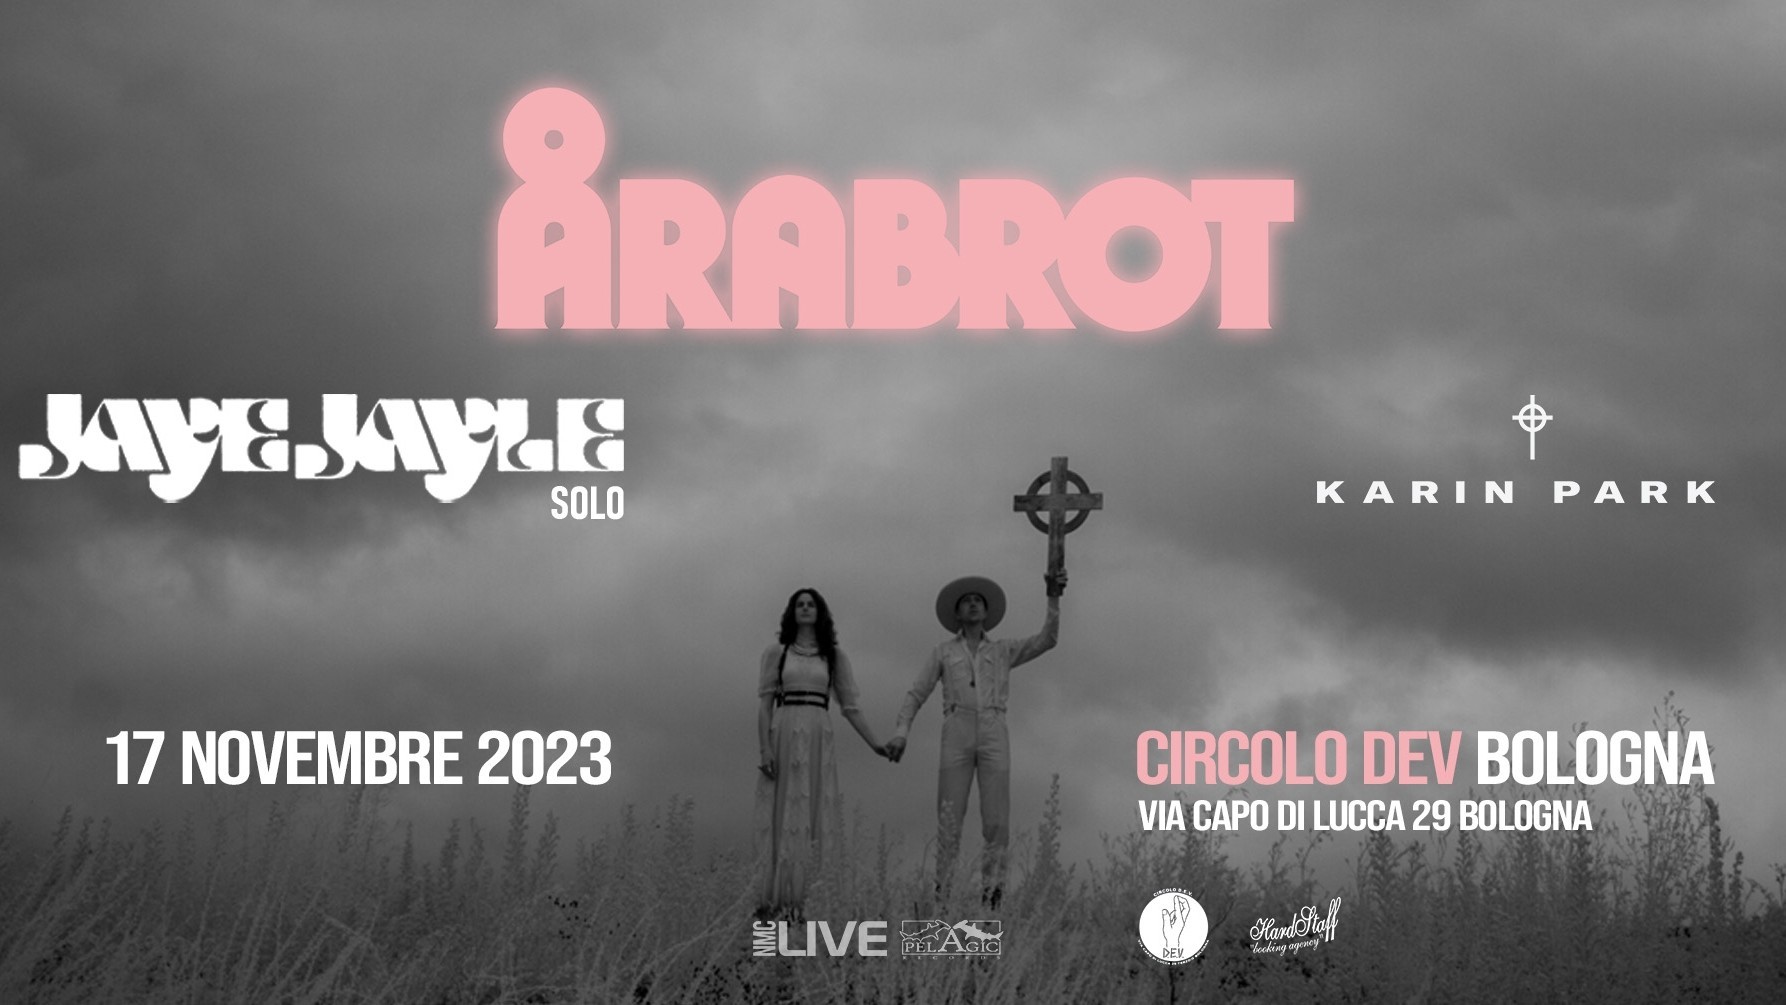 Arabrot / Jaye Jayle / Karin Park